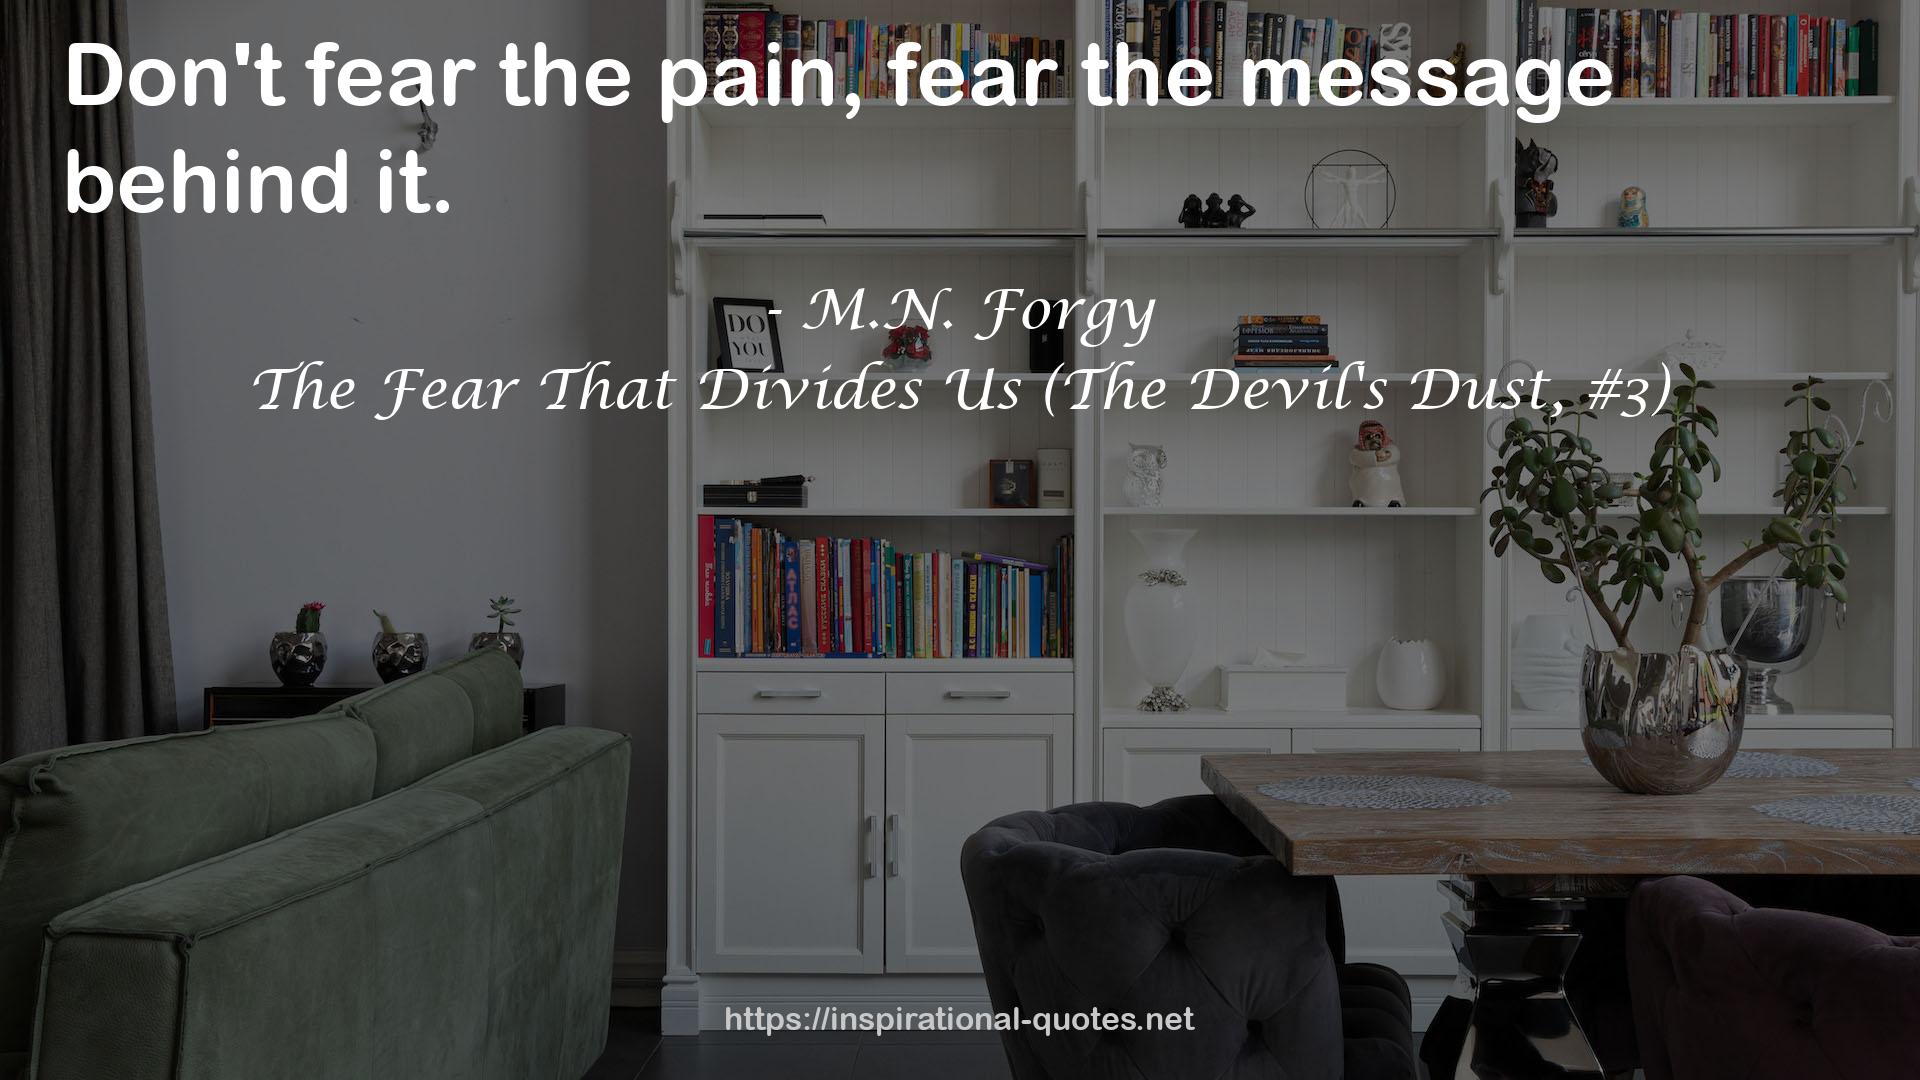 The Fear That Divides Us (The Devil's Dust, #3) QUOTES